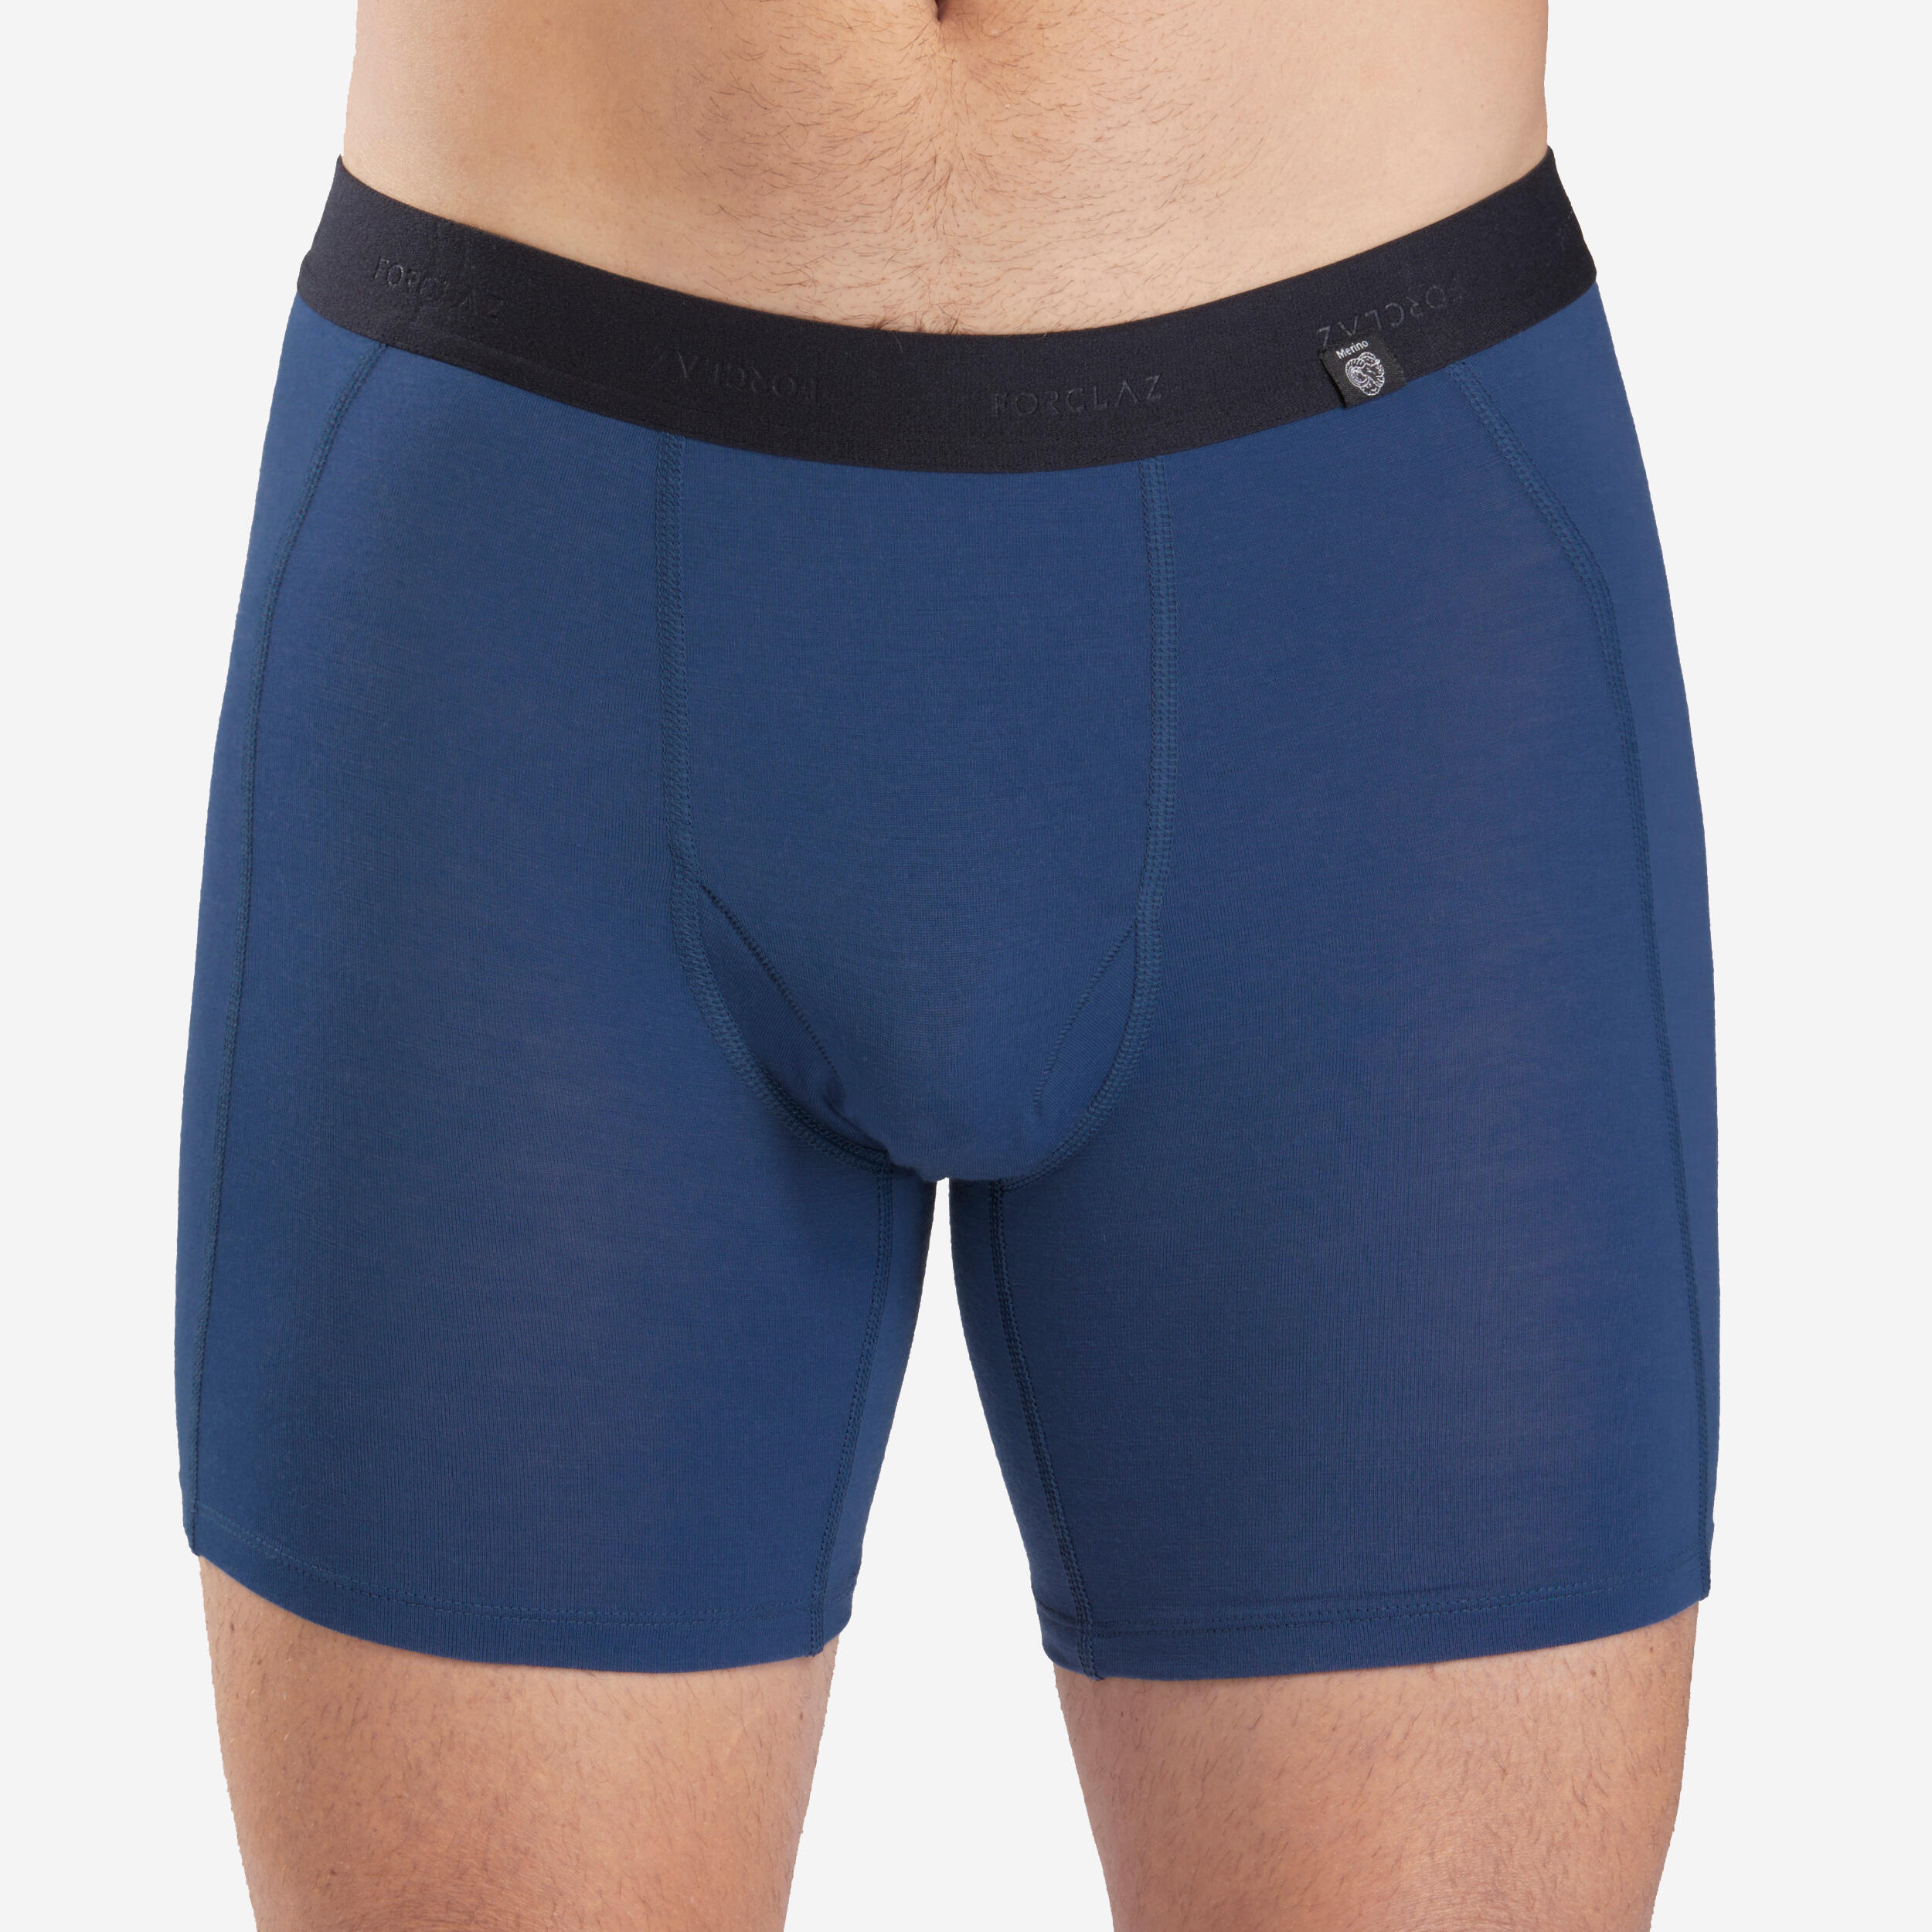 Men See Through Beach Boxer Briefs Shorts Underwear Swim Trunks Lounge Pants  | eBay